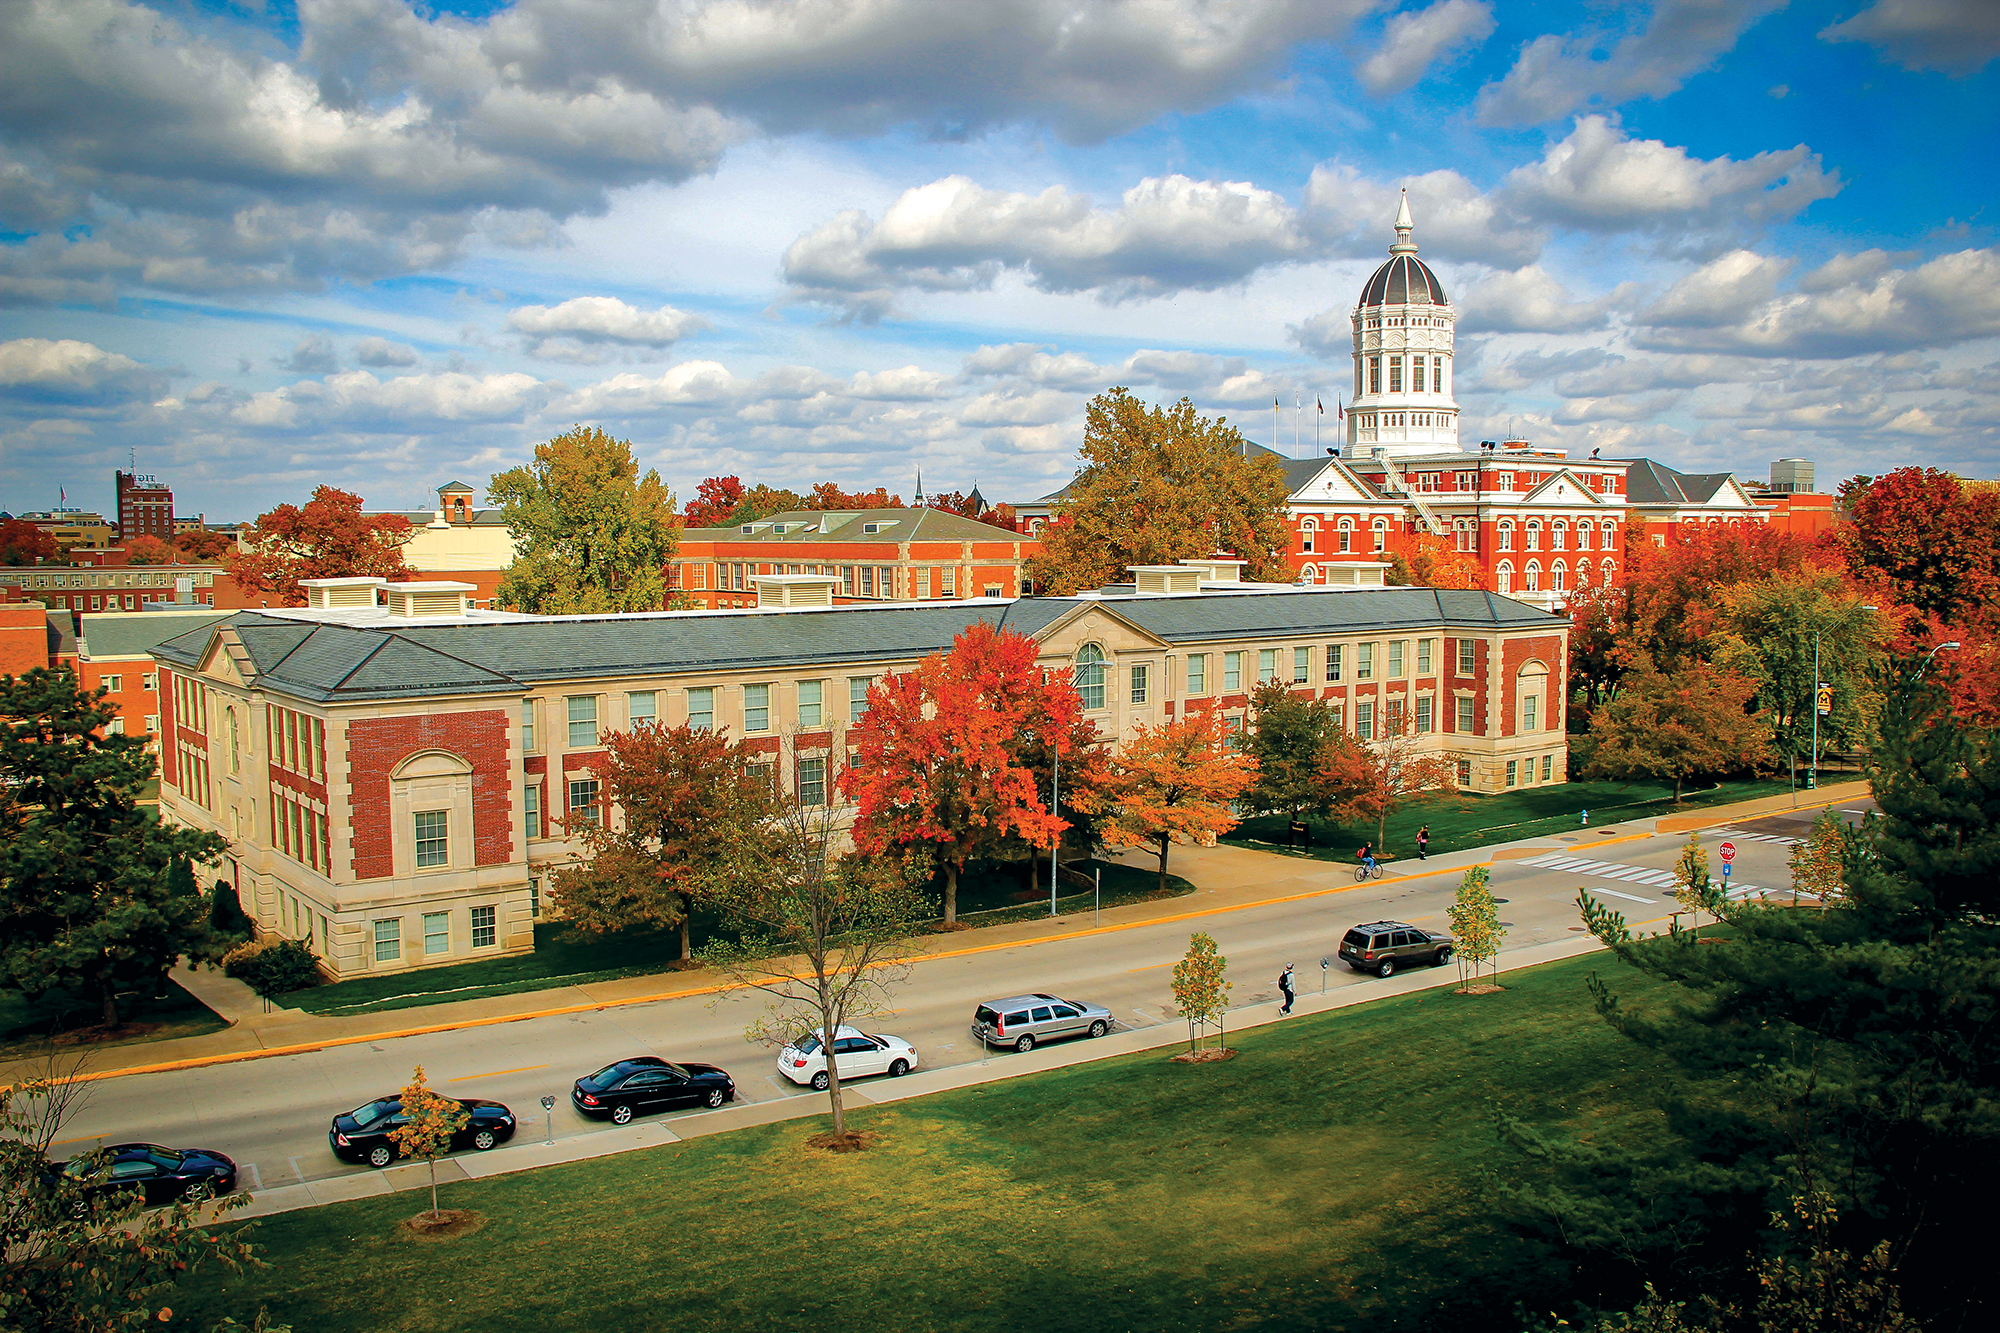 University of Missouri (Townsend Hall)